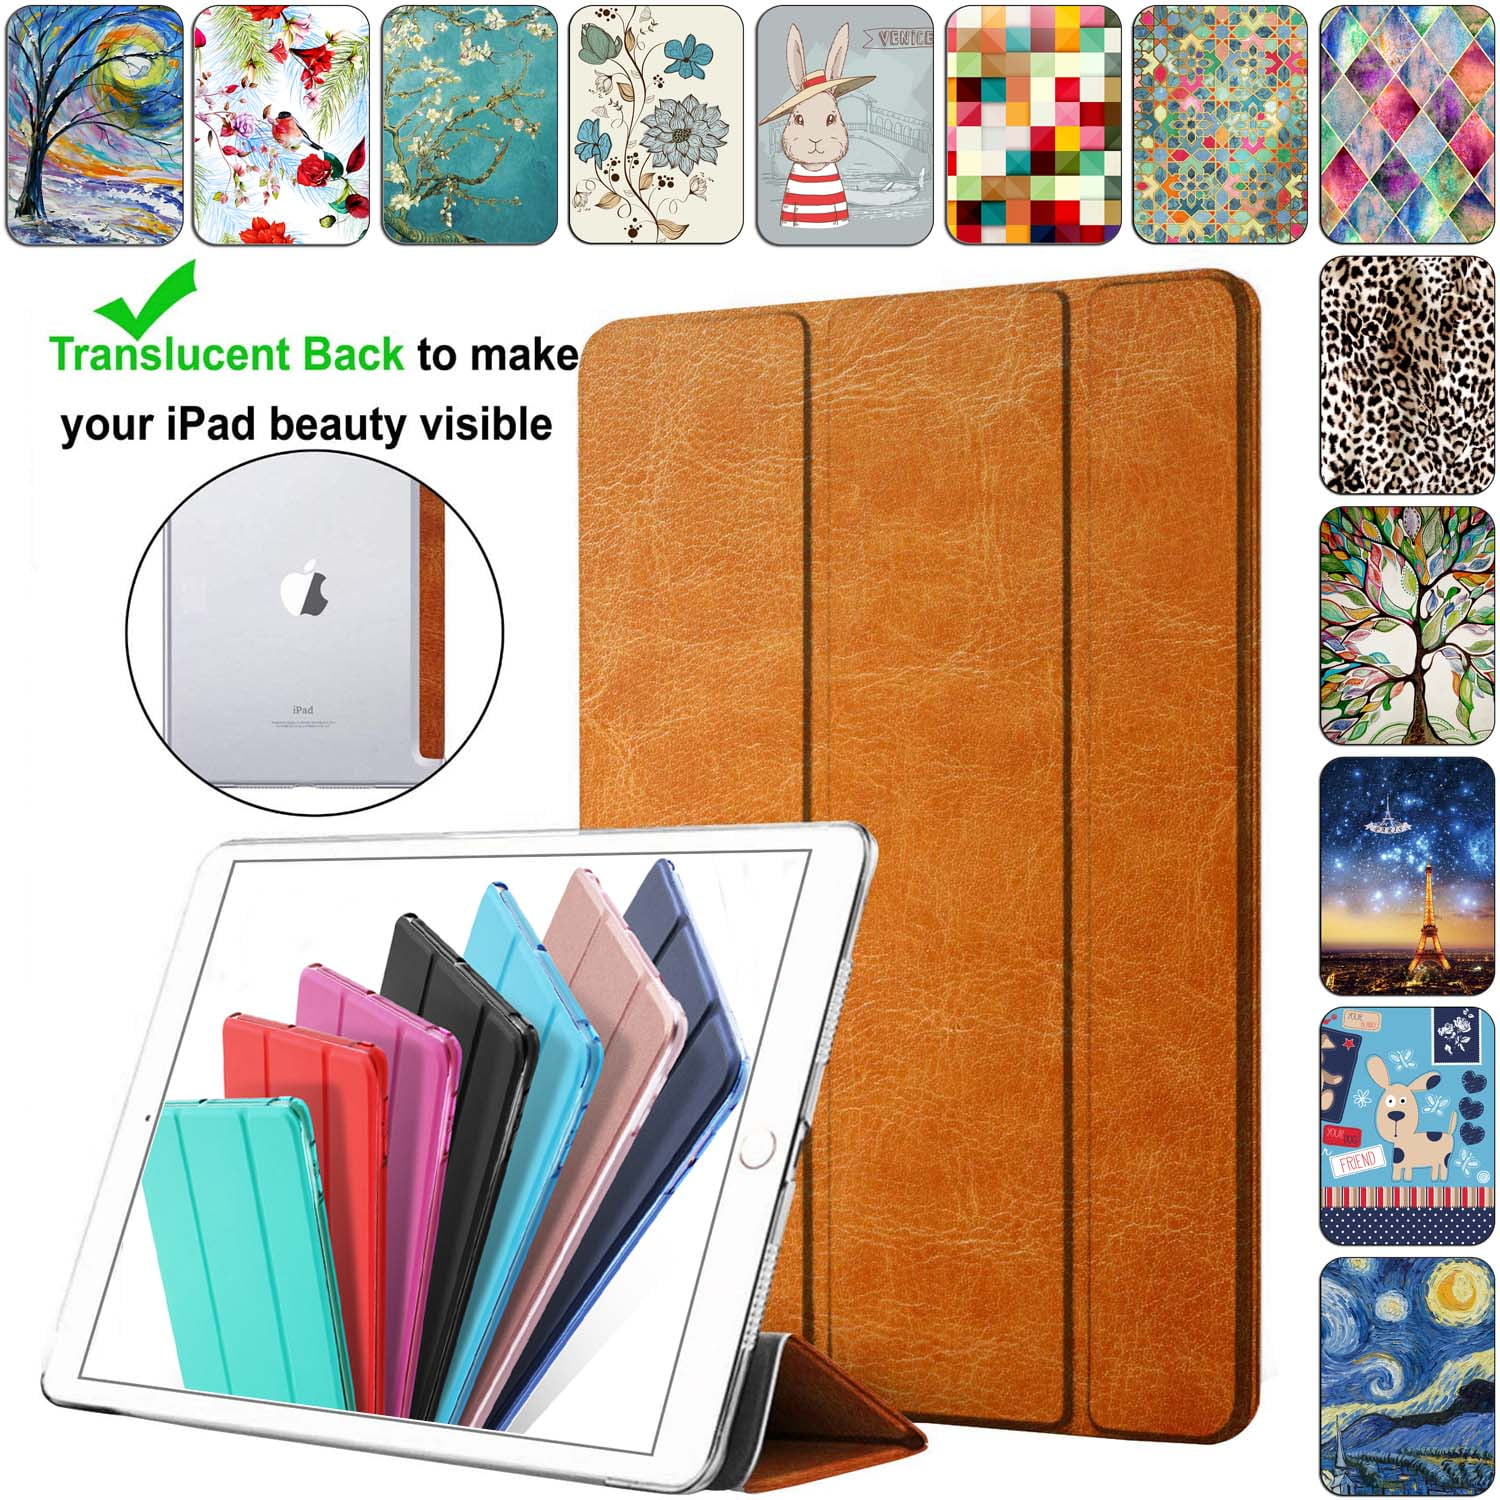 Watercolour Trees iPad Faux Leather Folio case Forest AutumnFall Air4 2020 8th gen,2019 7th,2018 6th,2017 5th gen,Pro12.9,11,10.5,9.7 Mini